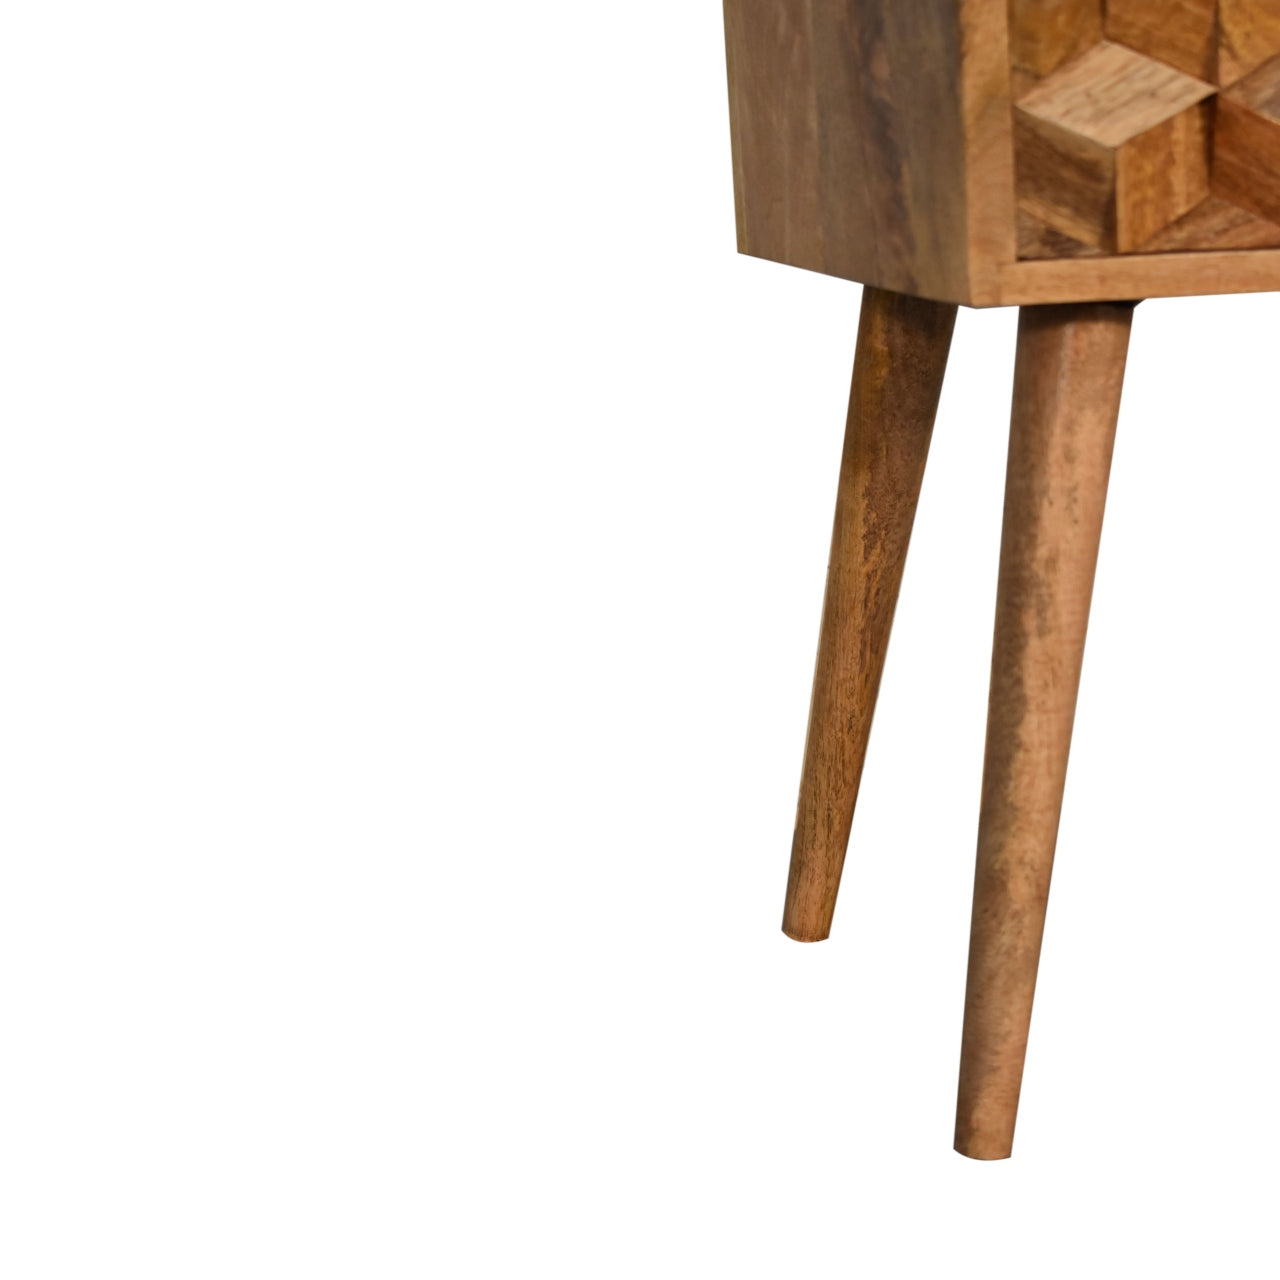 Mini Geo Cube Hand Carved Solid Wood Narrow Bedside Table | malletandplane.com